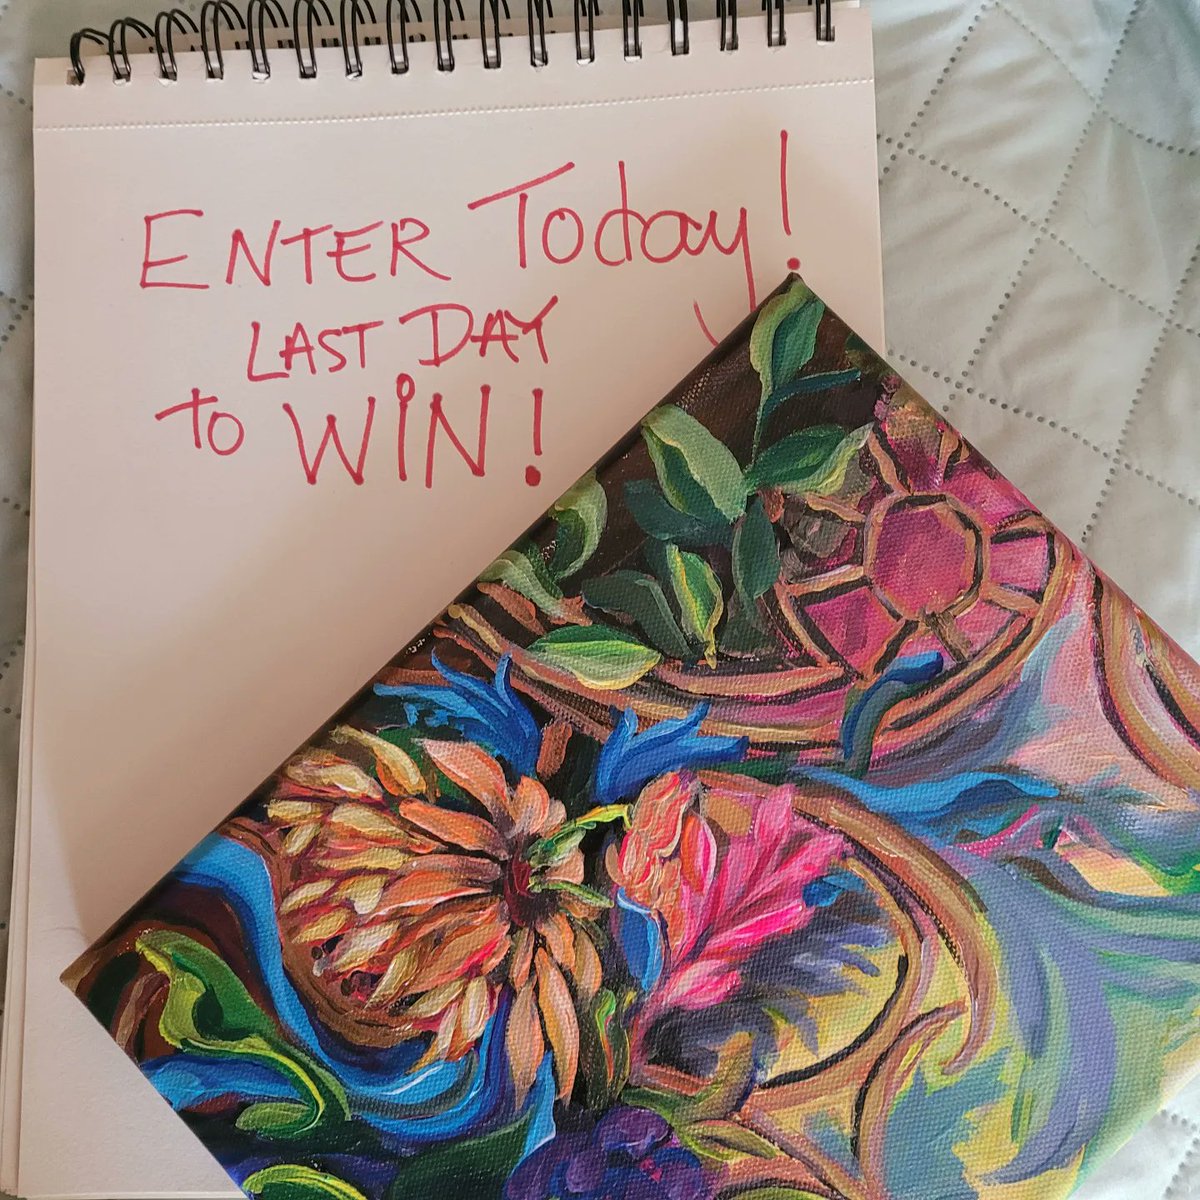 Sign up! Win a painting! 
pajaritaflora.com/fall-website-g…
#giveaway
#GiveawayAlert 
#freepainting
#beawinner
#artistpromotion